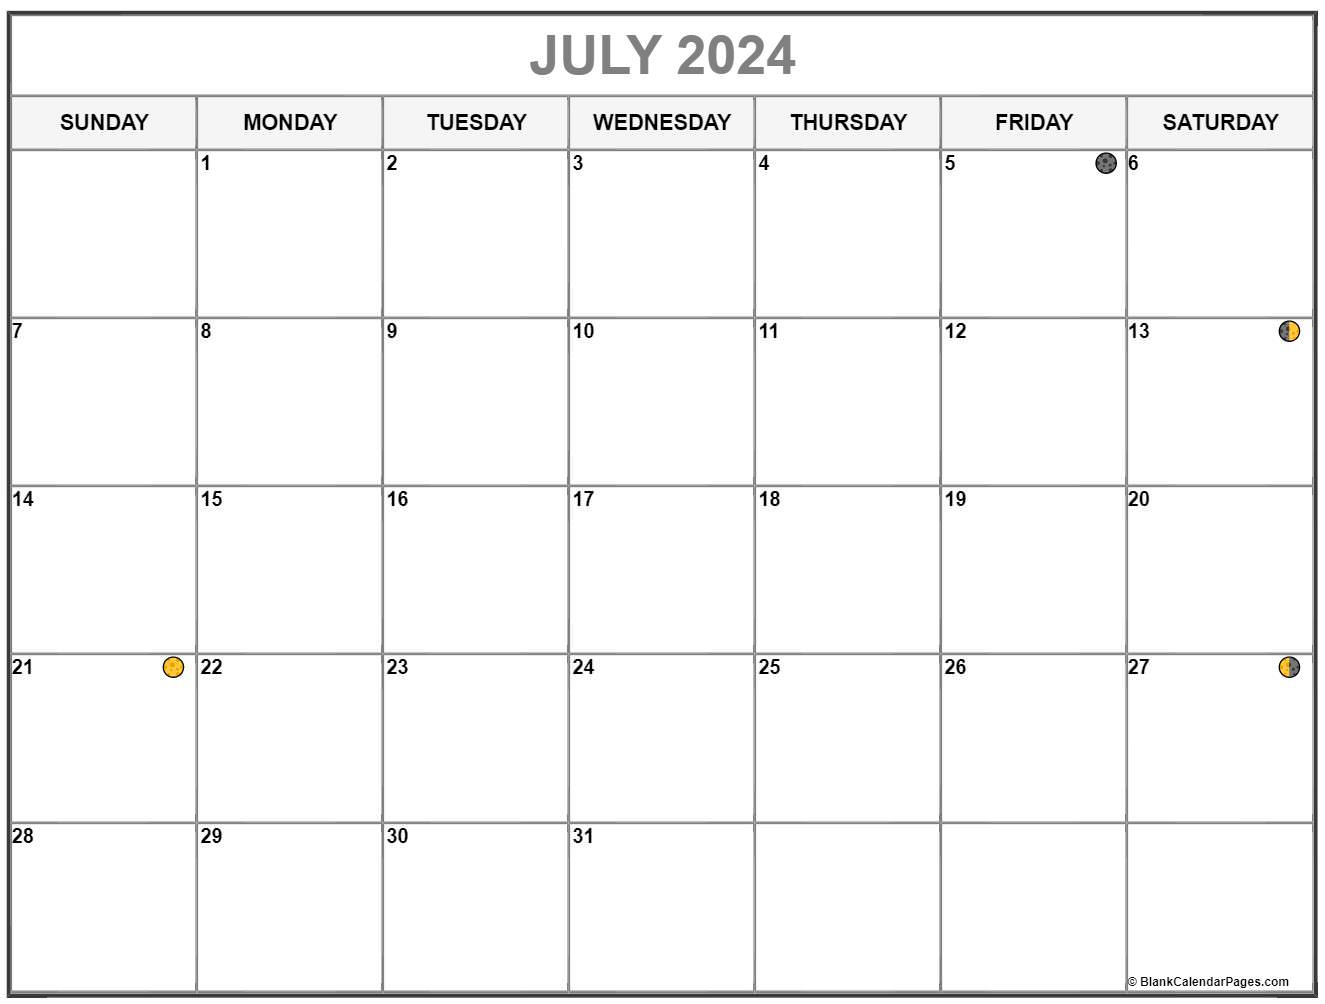 July 2024 Lunar Calendar | Moon Phase Calendar regarding Moon July 2024 Calendar